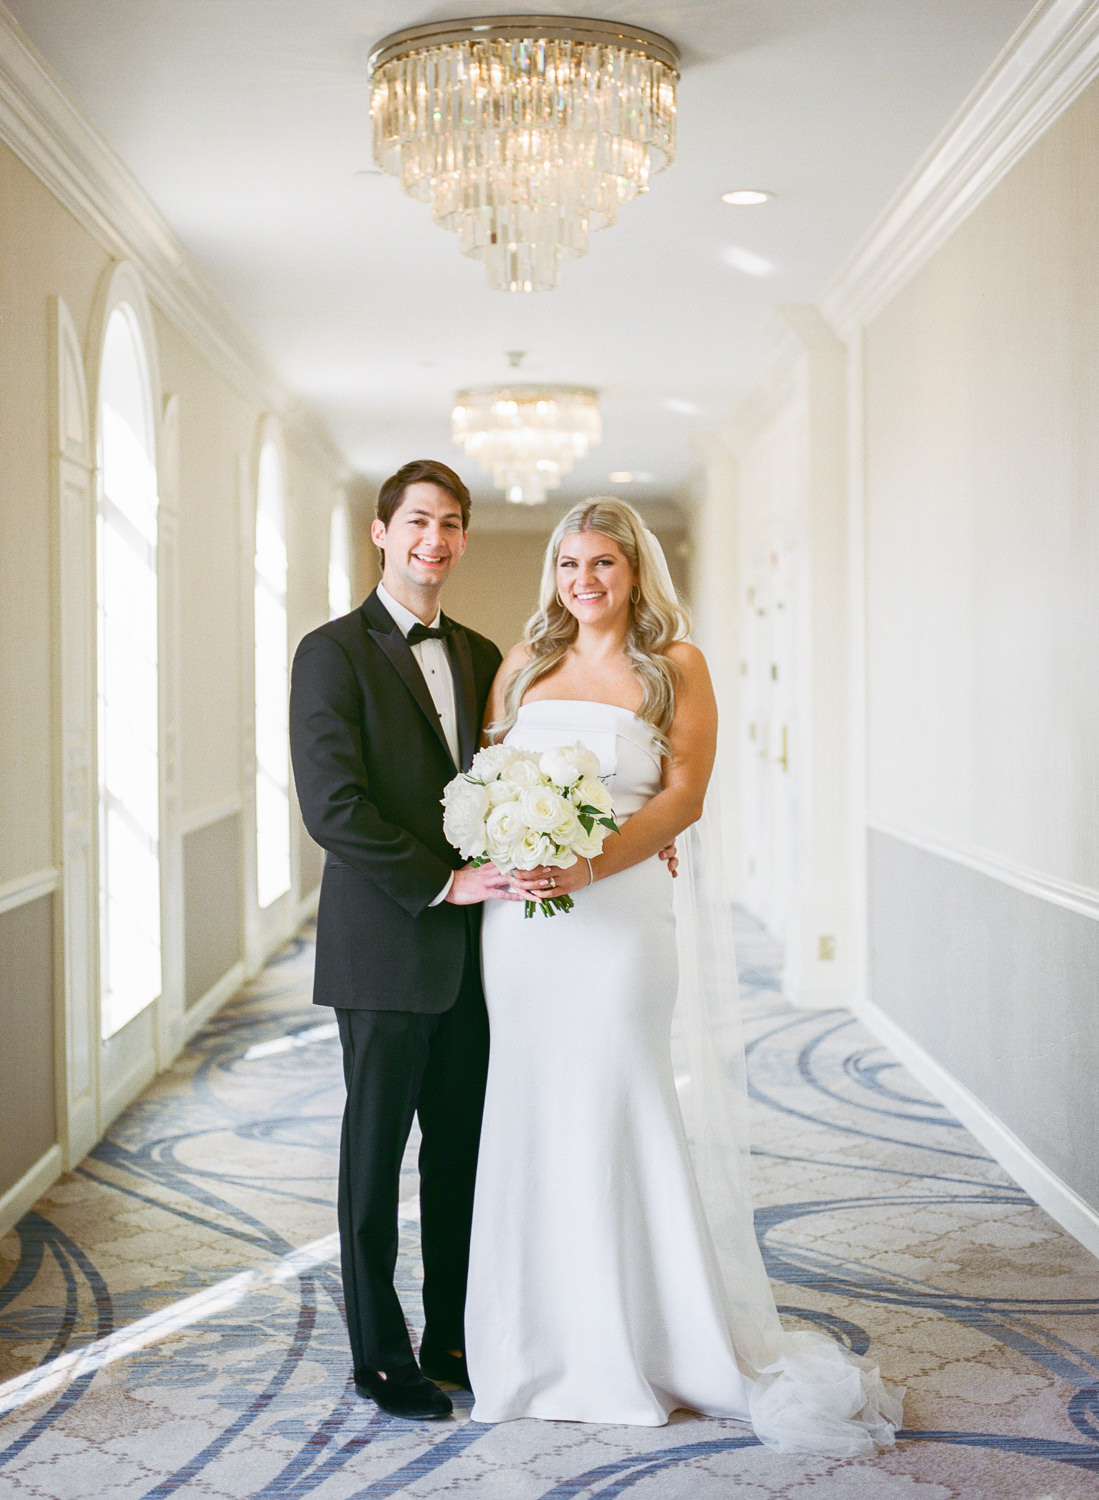 St. Louis wedding photographer; Erica Robnett Photography